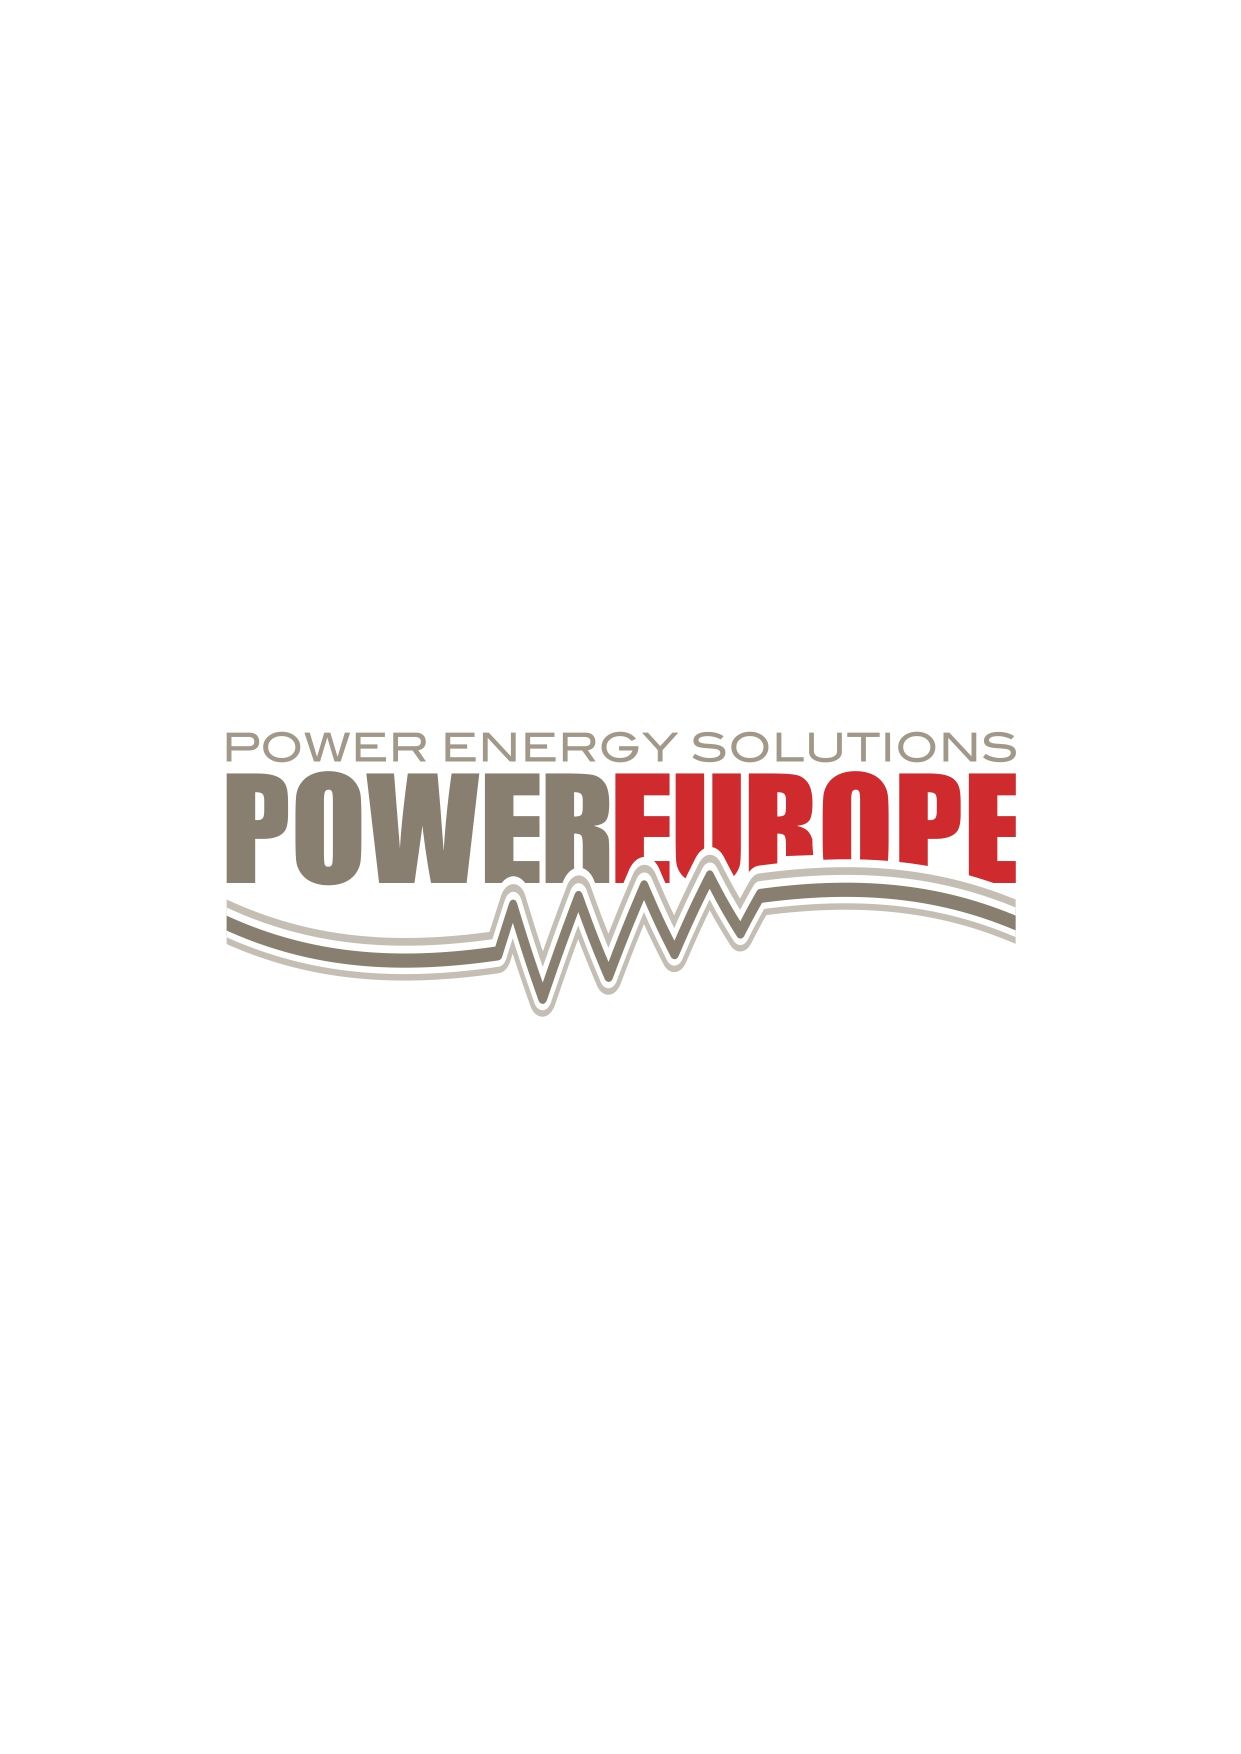 Power Europe